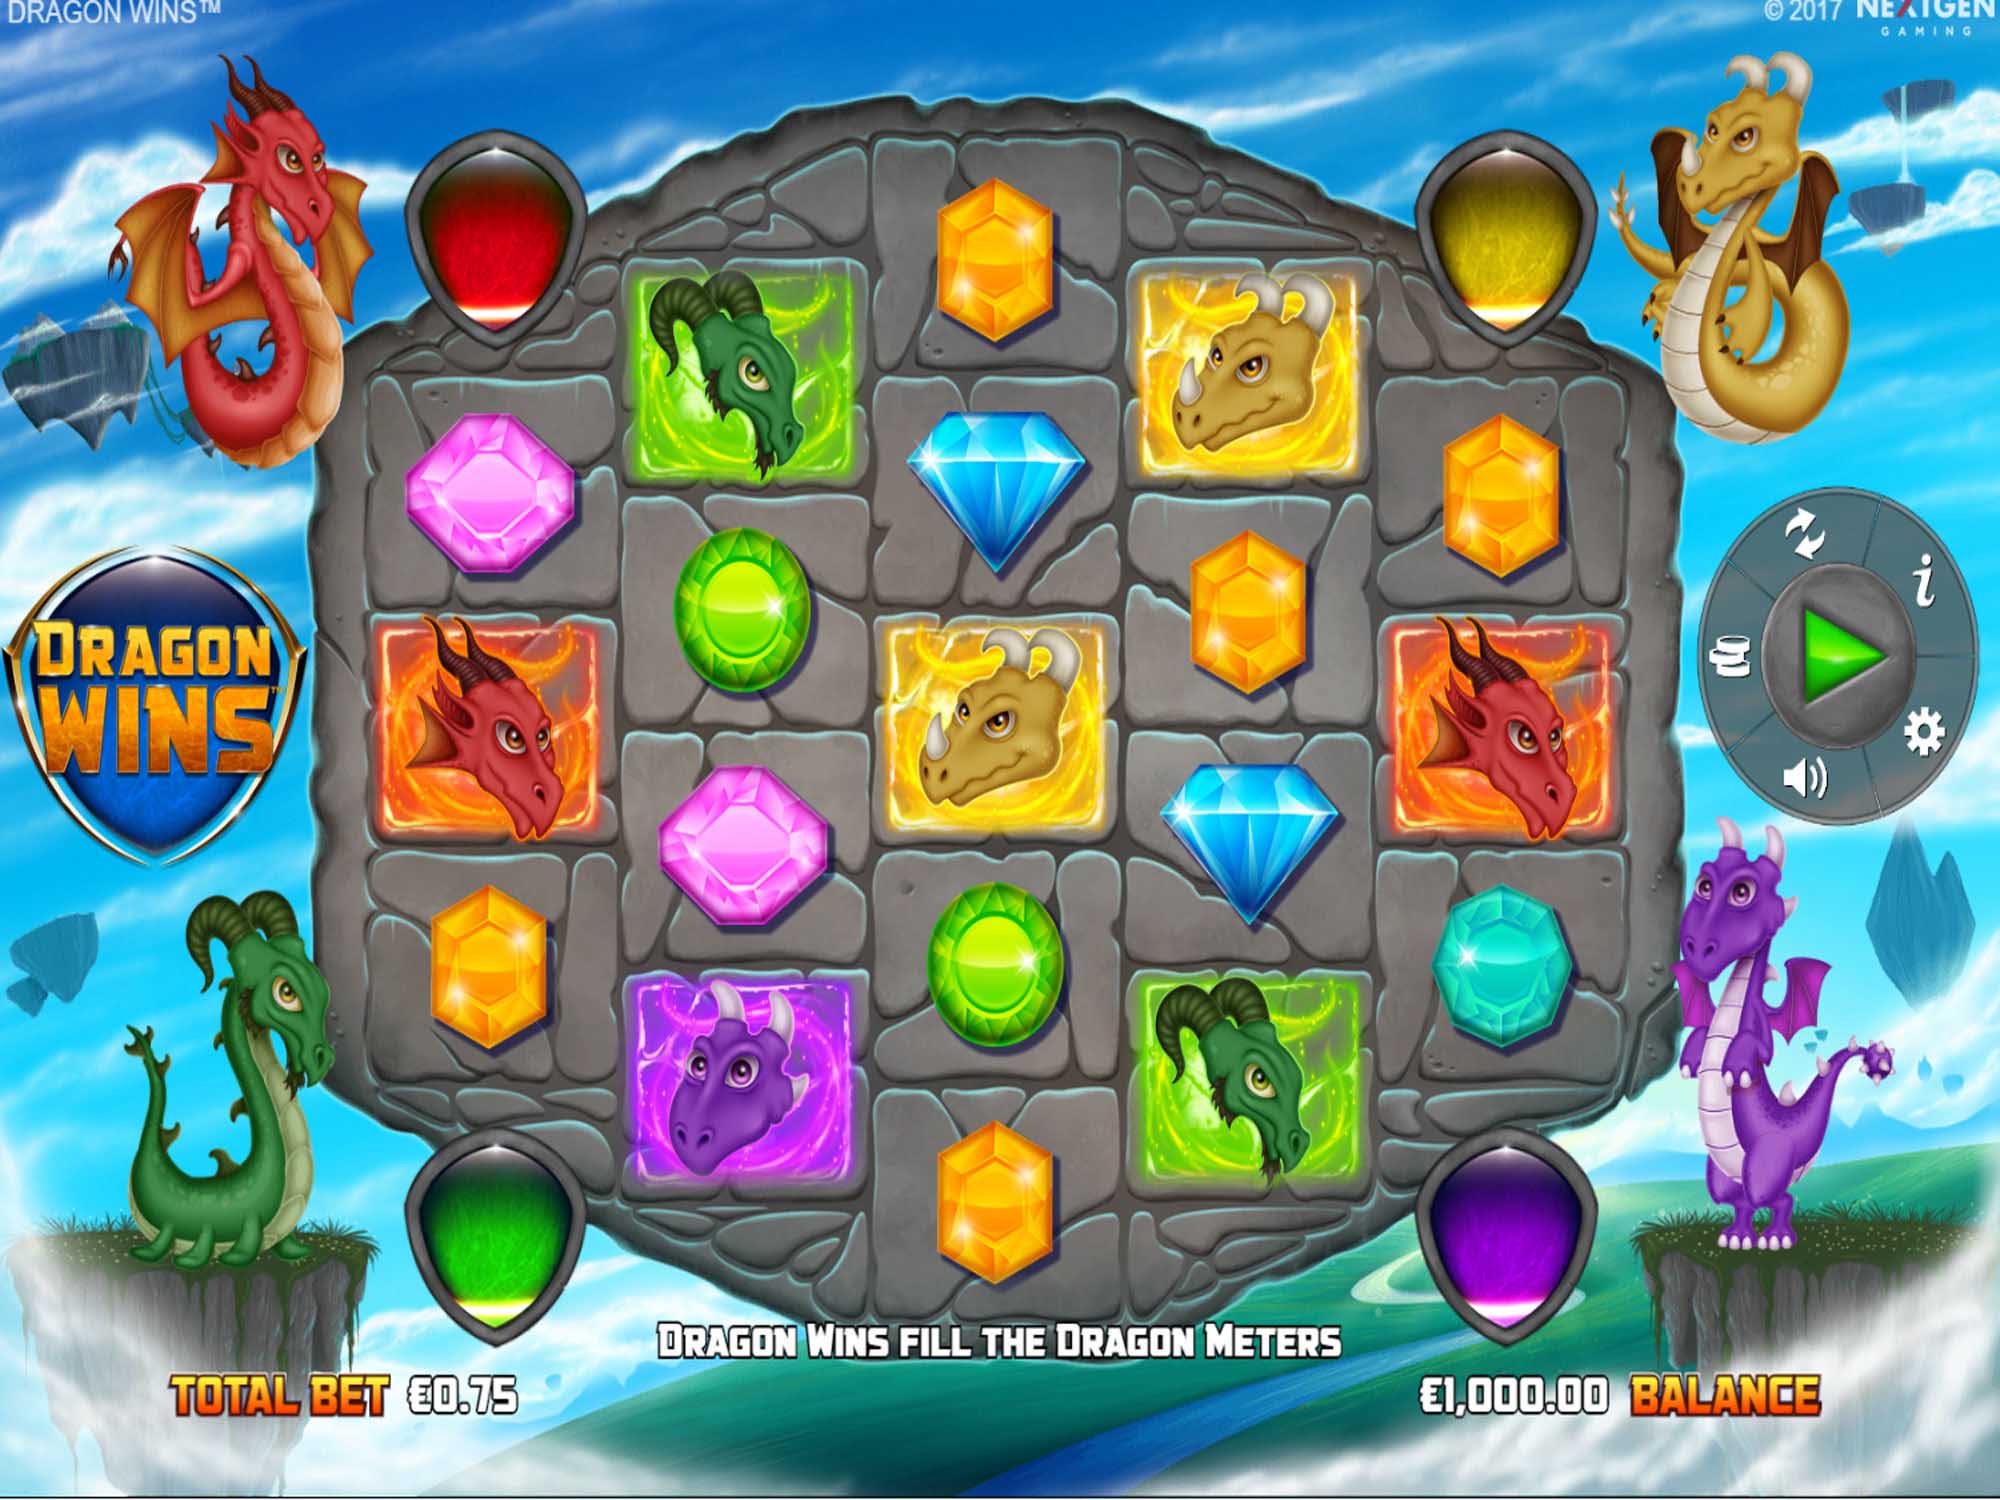 Dragon Wins slot game screenshot